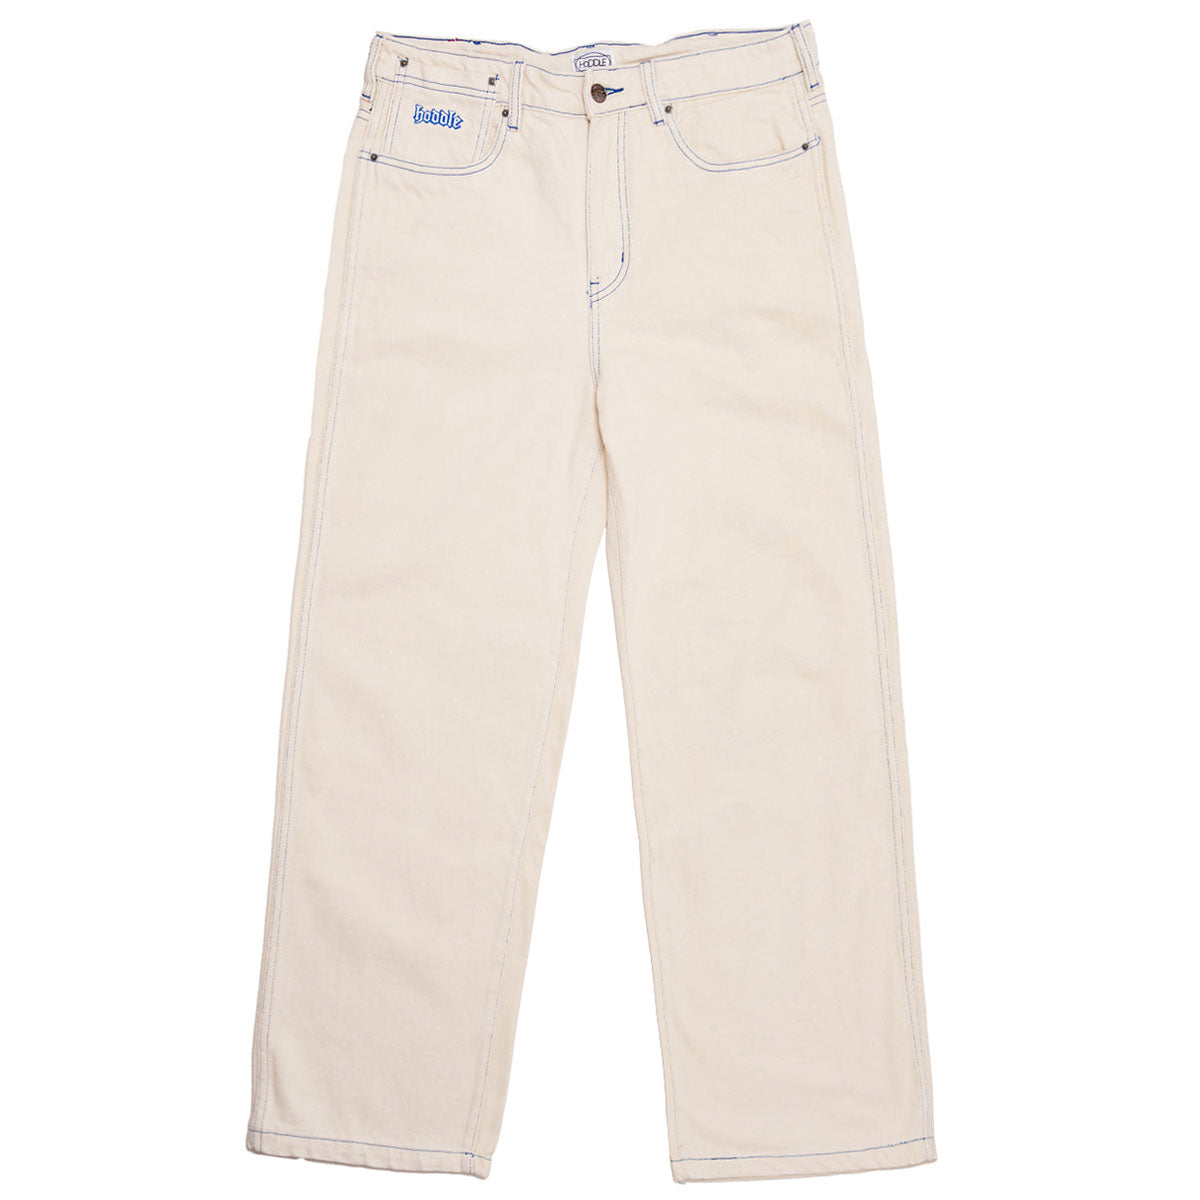 Hoddle 16o Denim Ranger Jeans - White/Blue Stich image 1